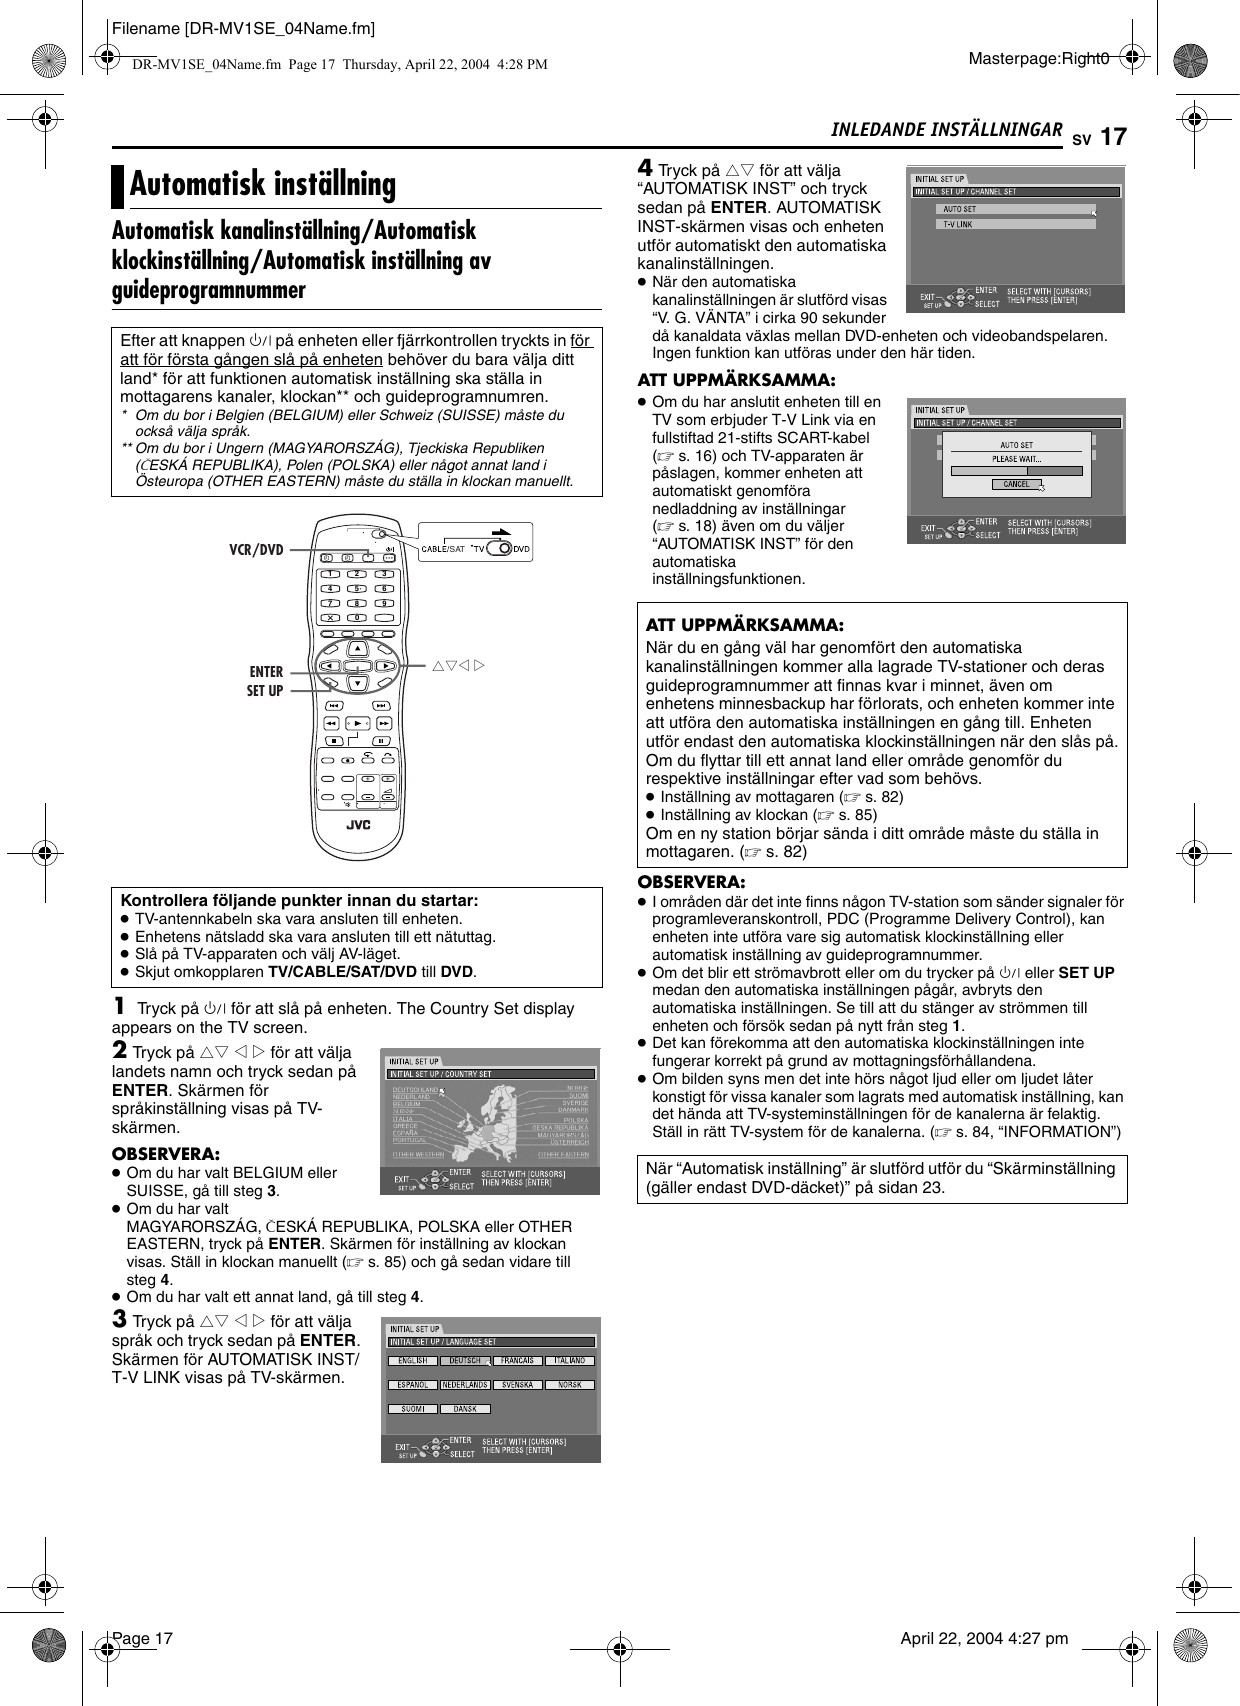 JVC DR MV1BEU MV1SE User Manual LPT0937 008A